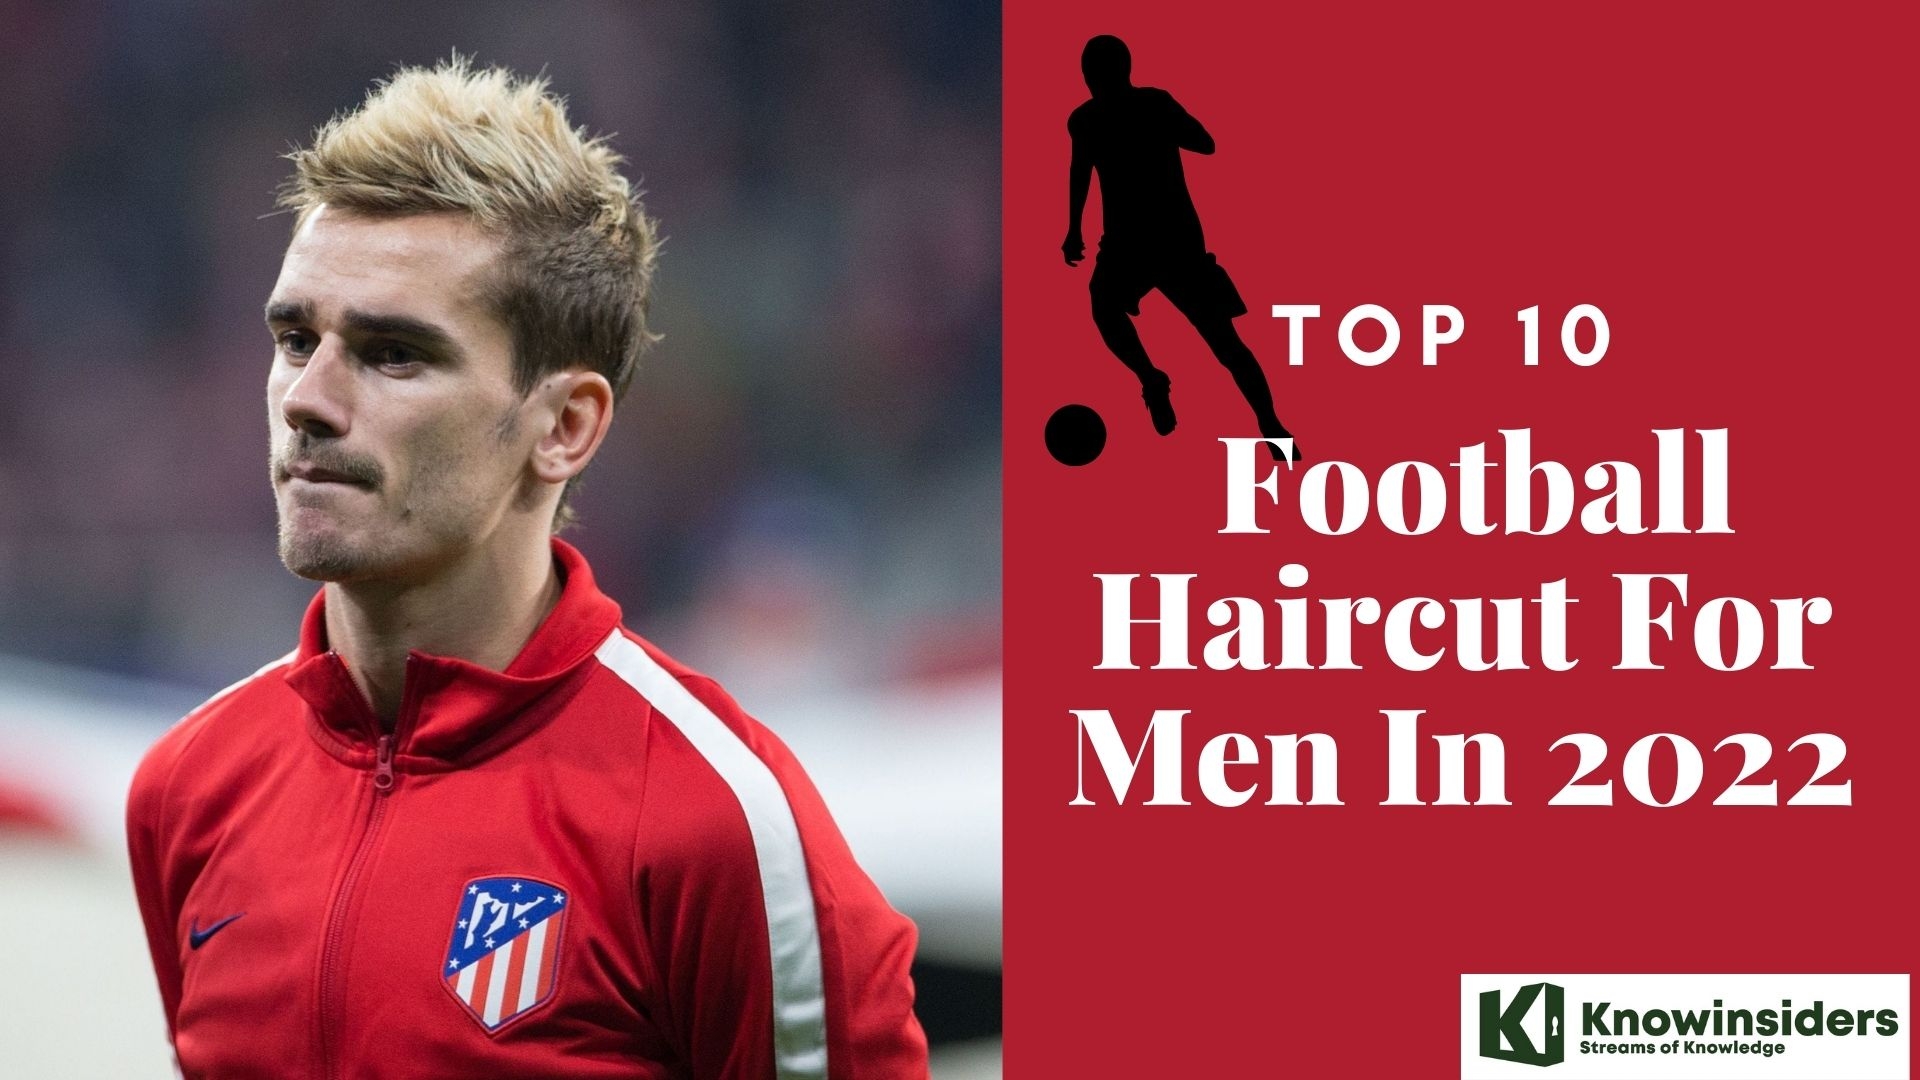 Top 10 Football Haircut For Men In 2022